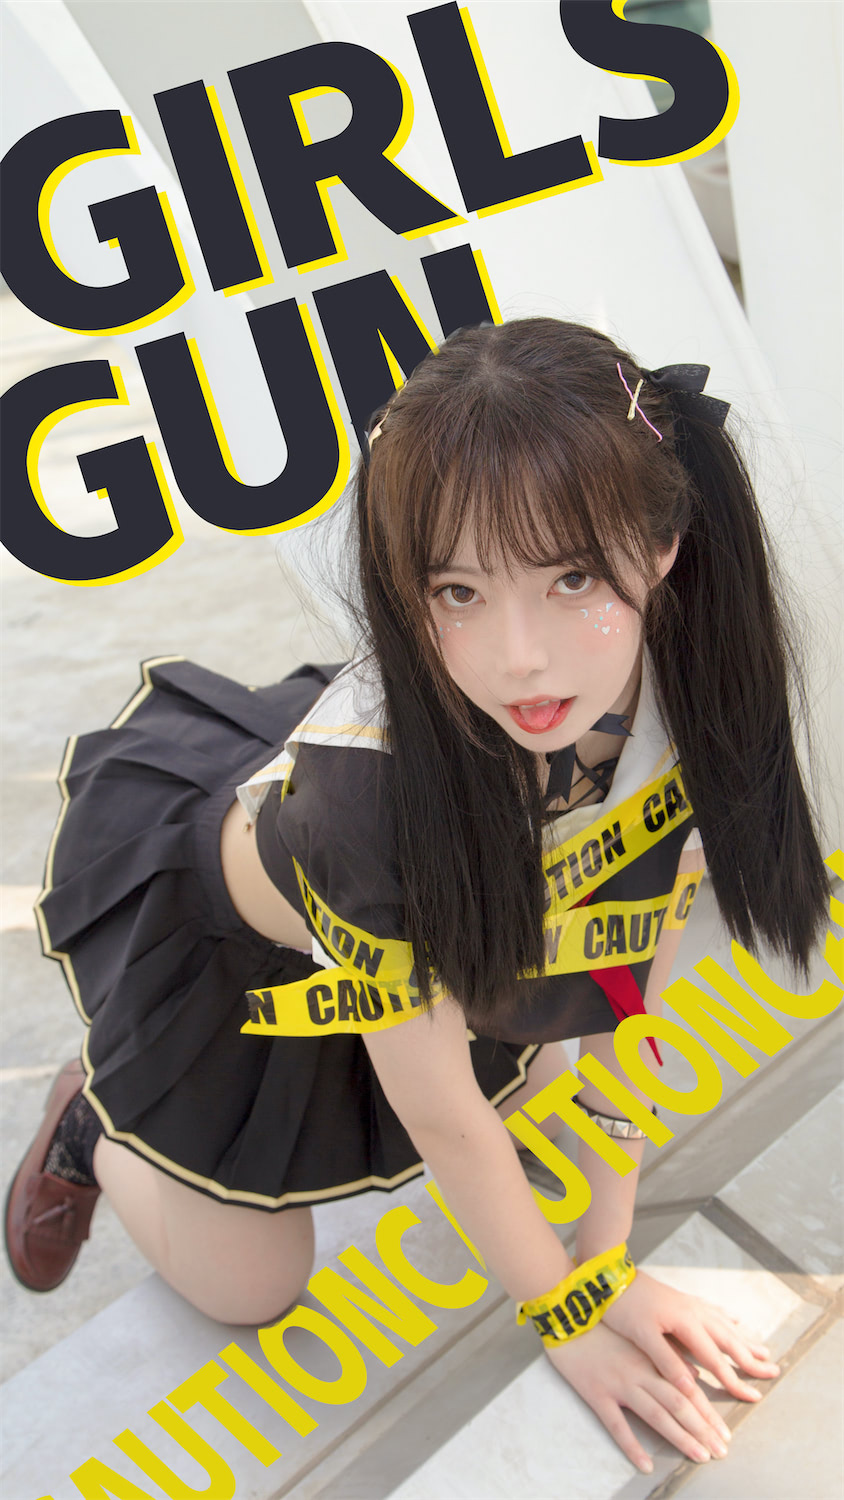 Fushii 海堂禁止GUN少女1